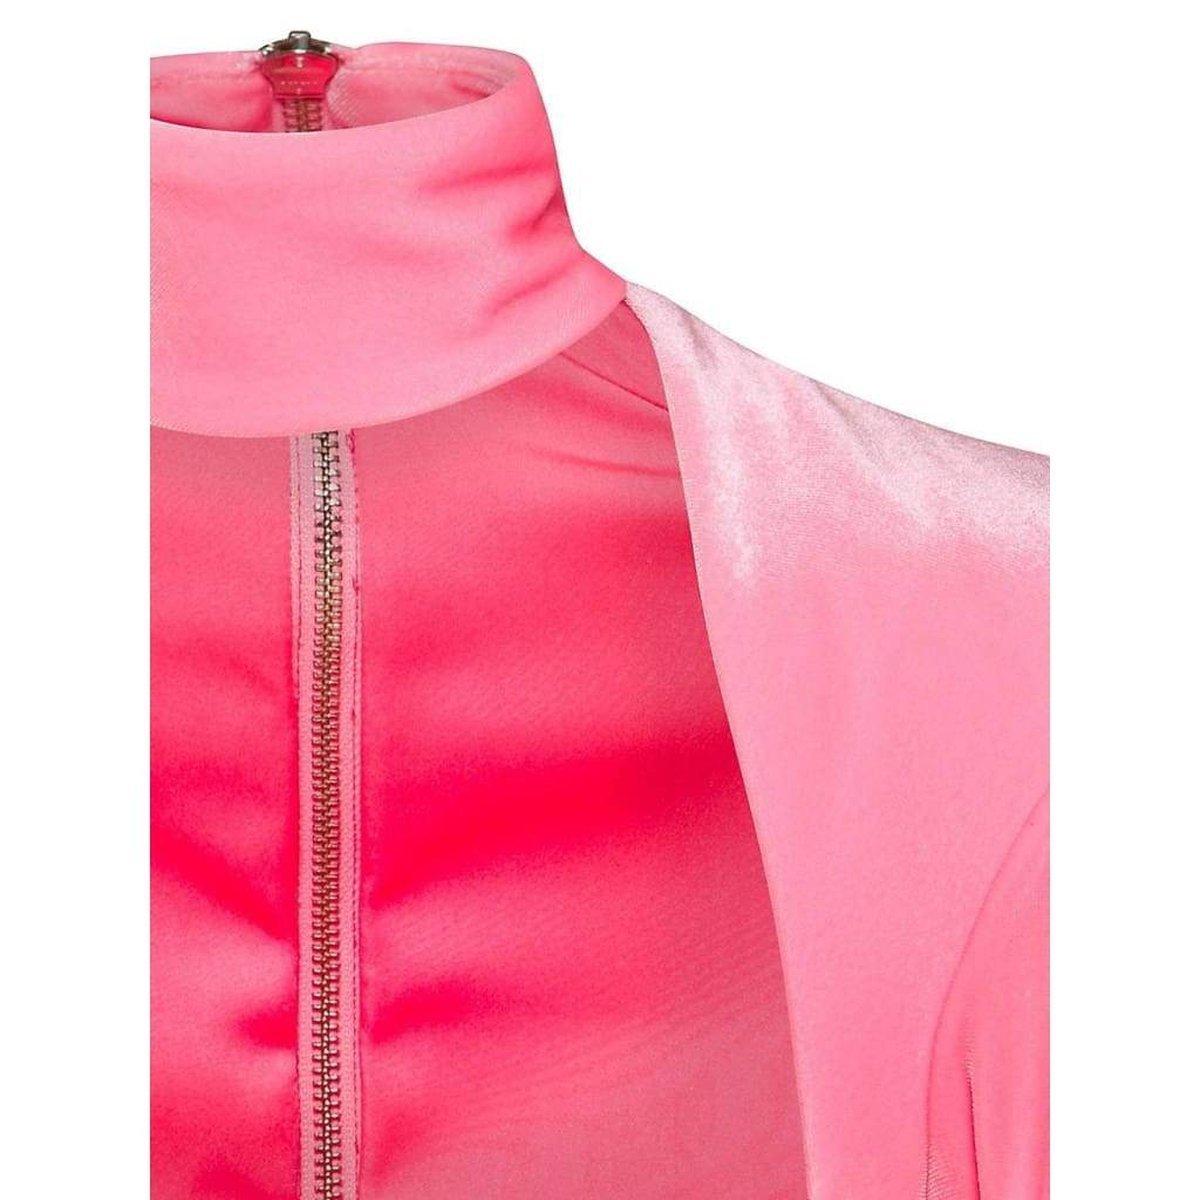 alex perry pink dress